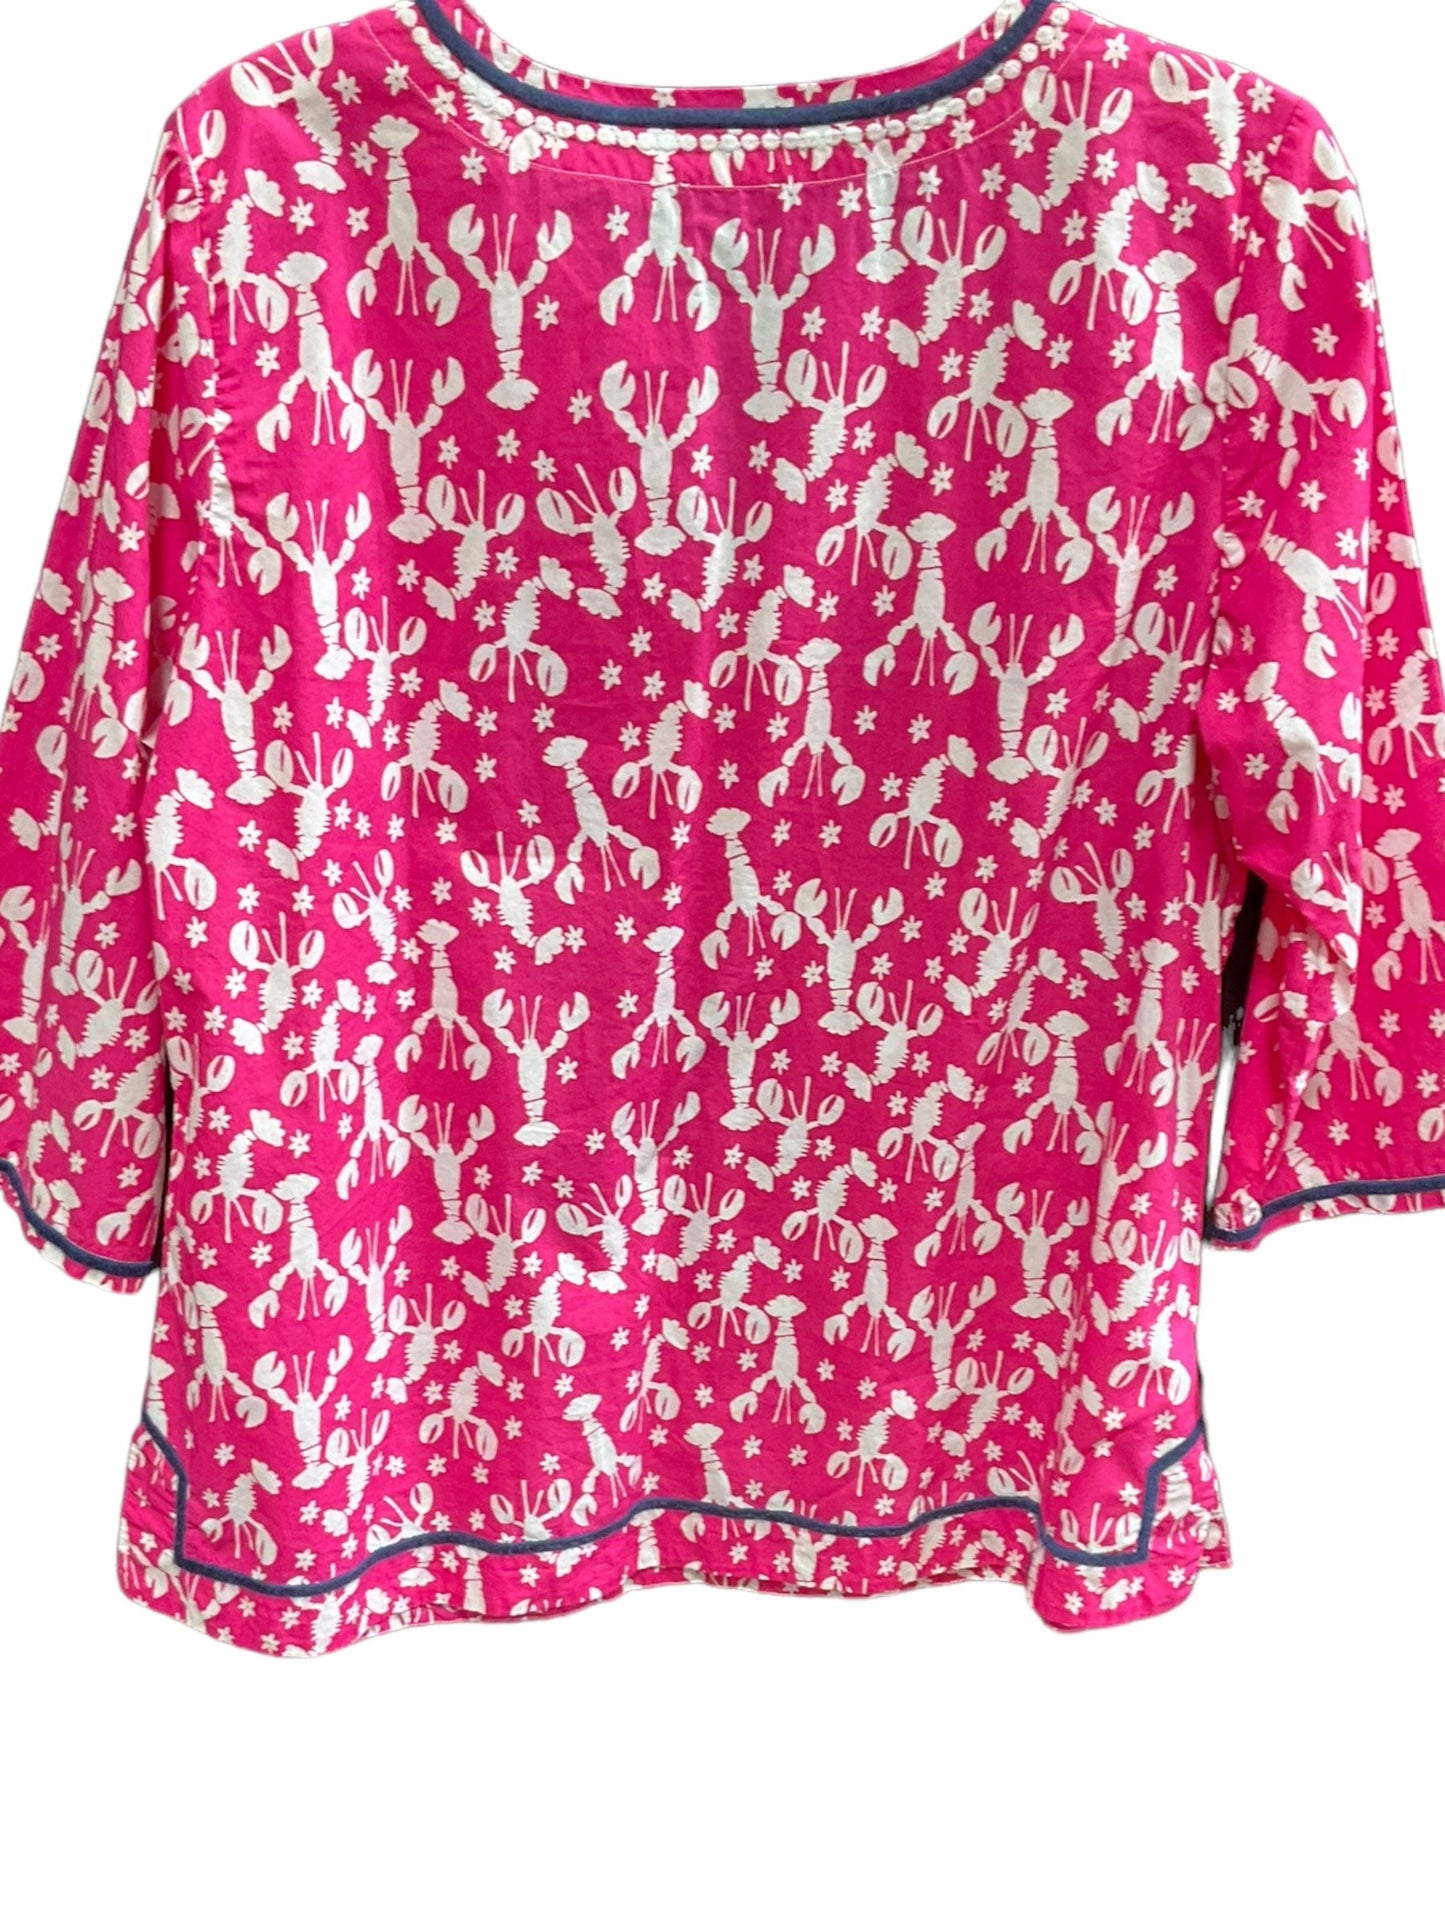 Pink & White Top 3/4 Sleeve Basic Talbots, Size L